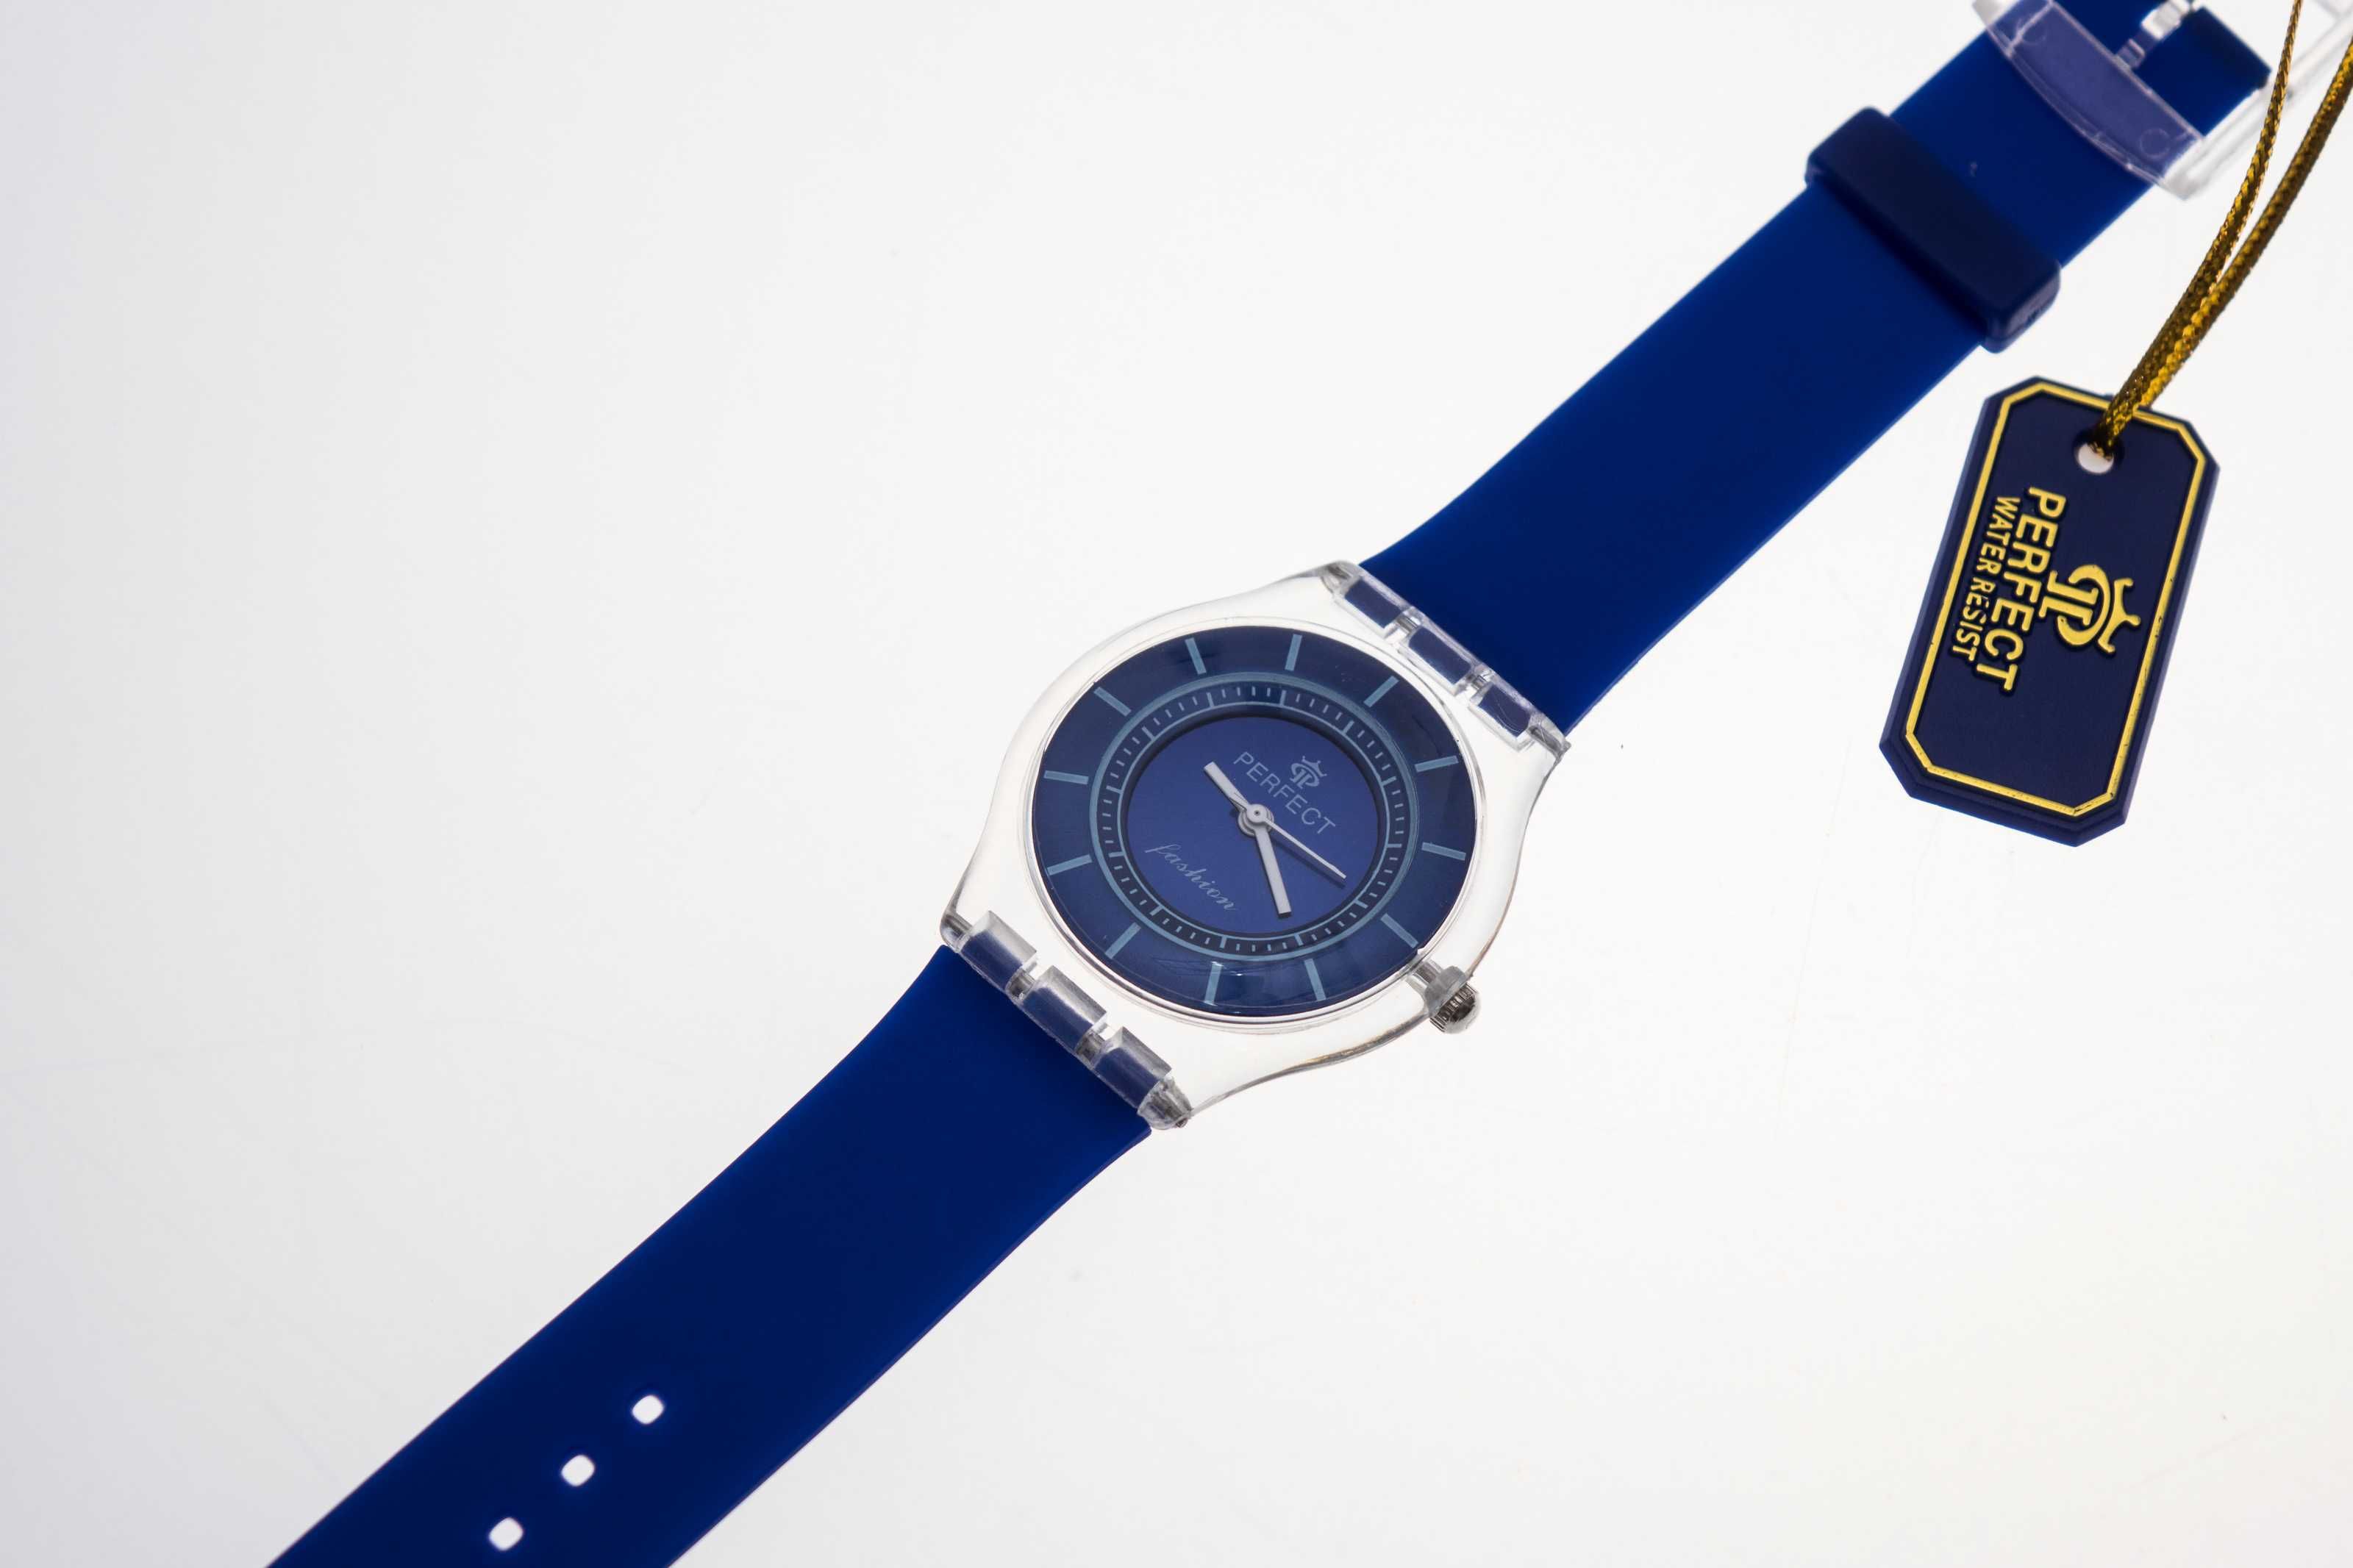 Sportowy zegarek Perfect Blue - uwaga, drobna wada!